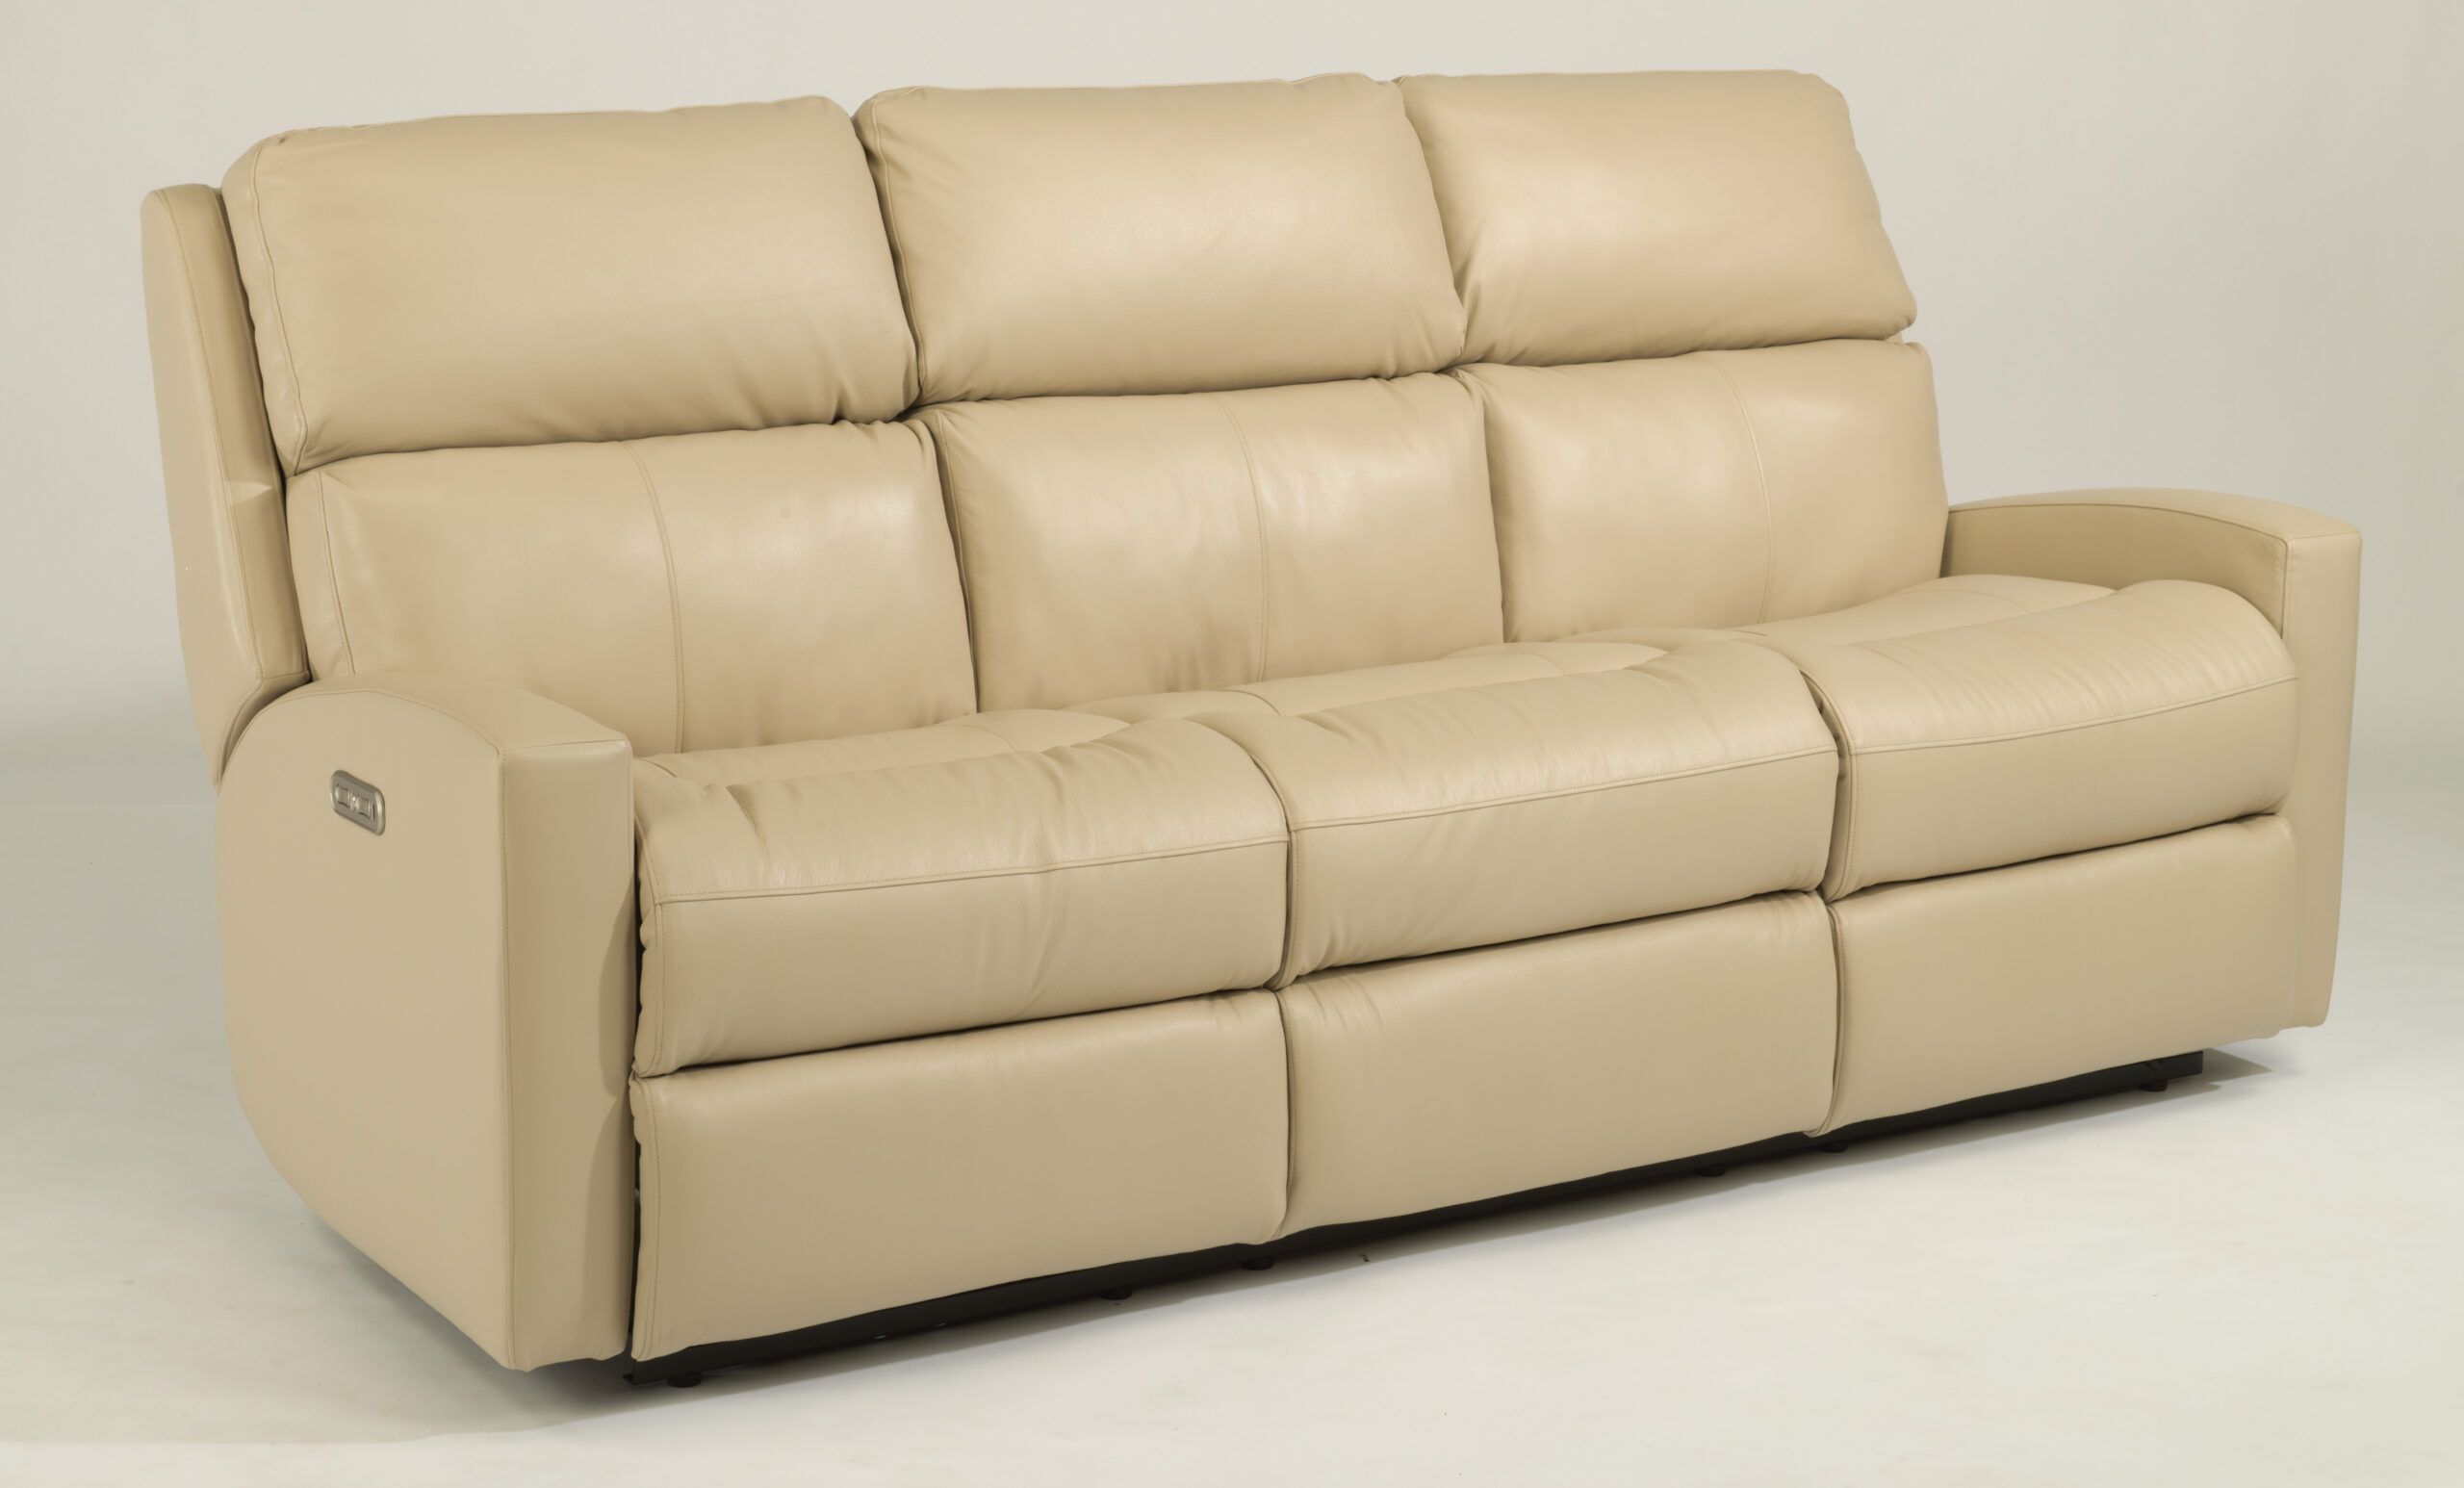 flexsteel catalina leather recliner sofa